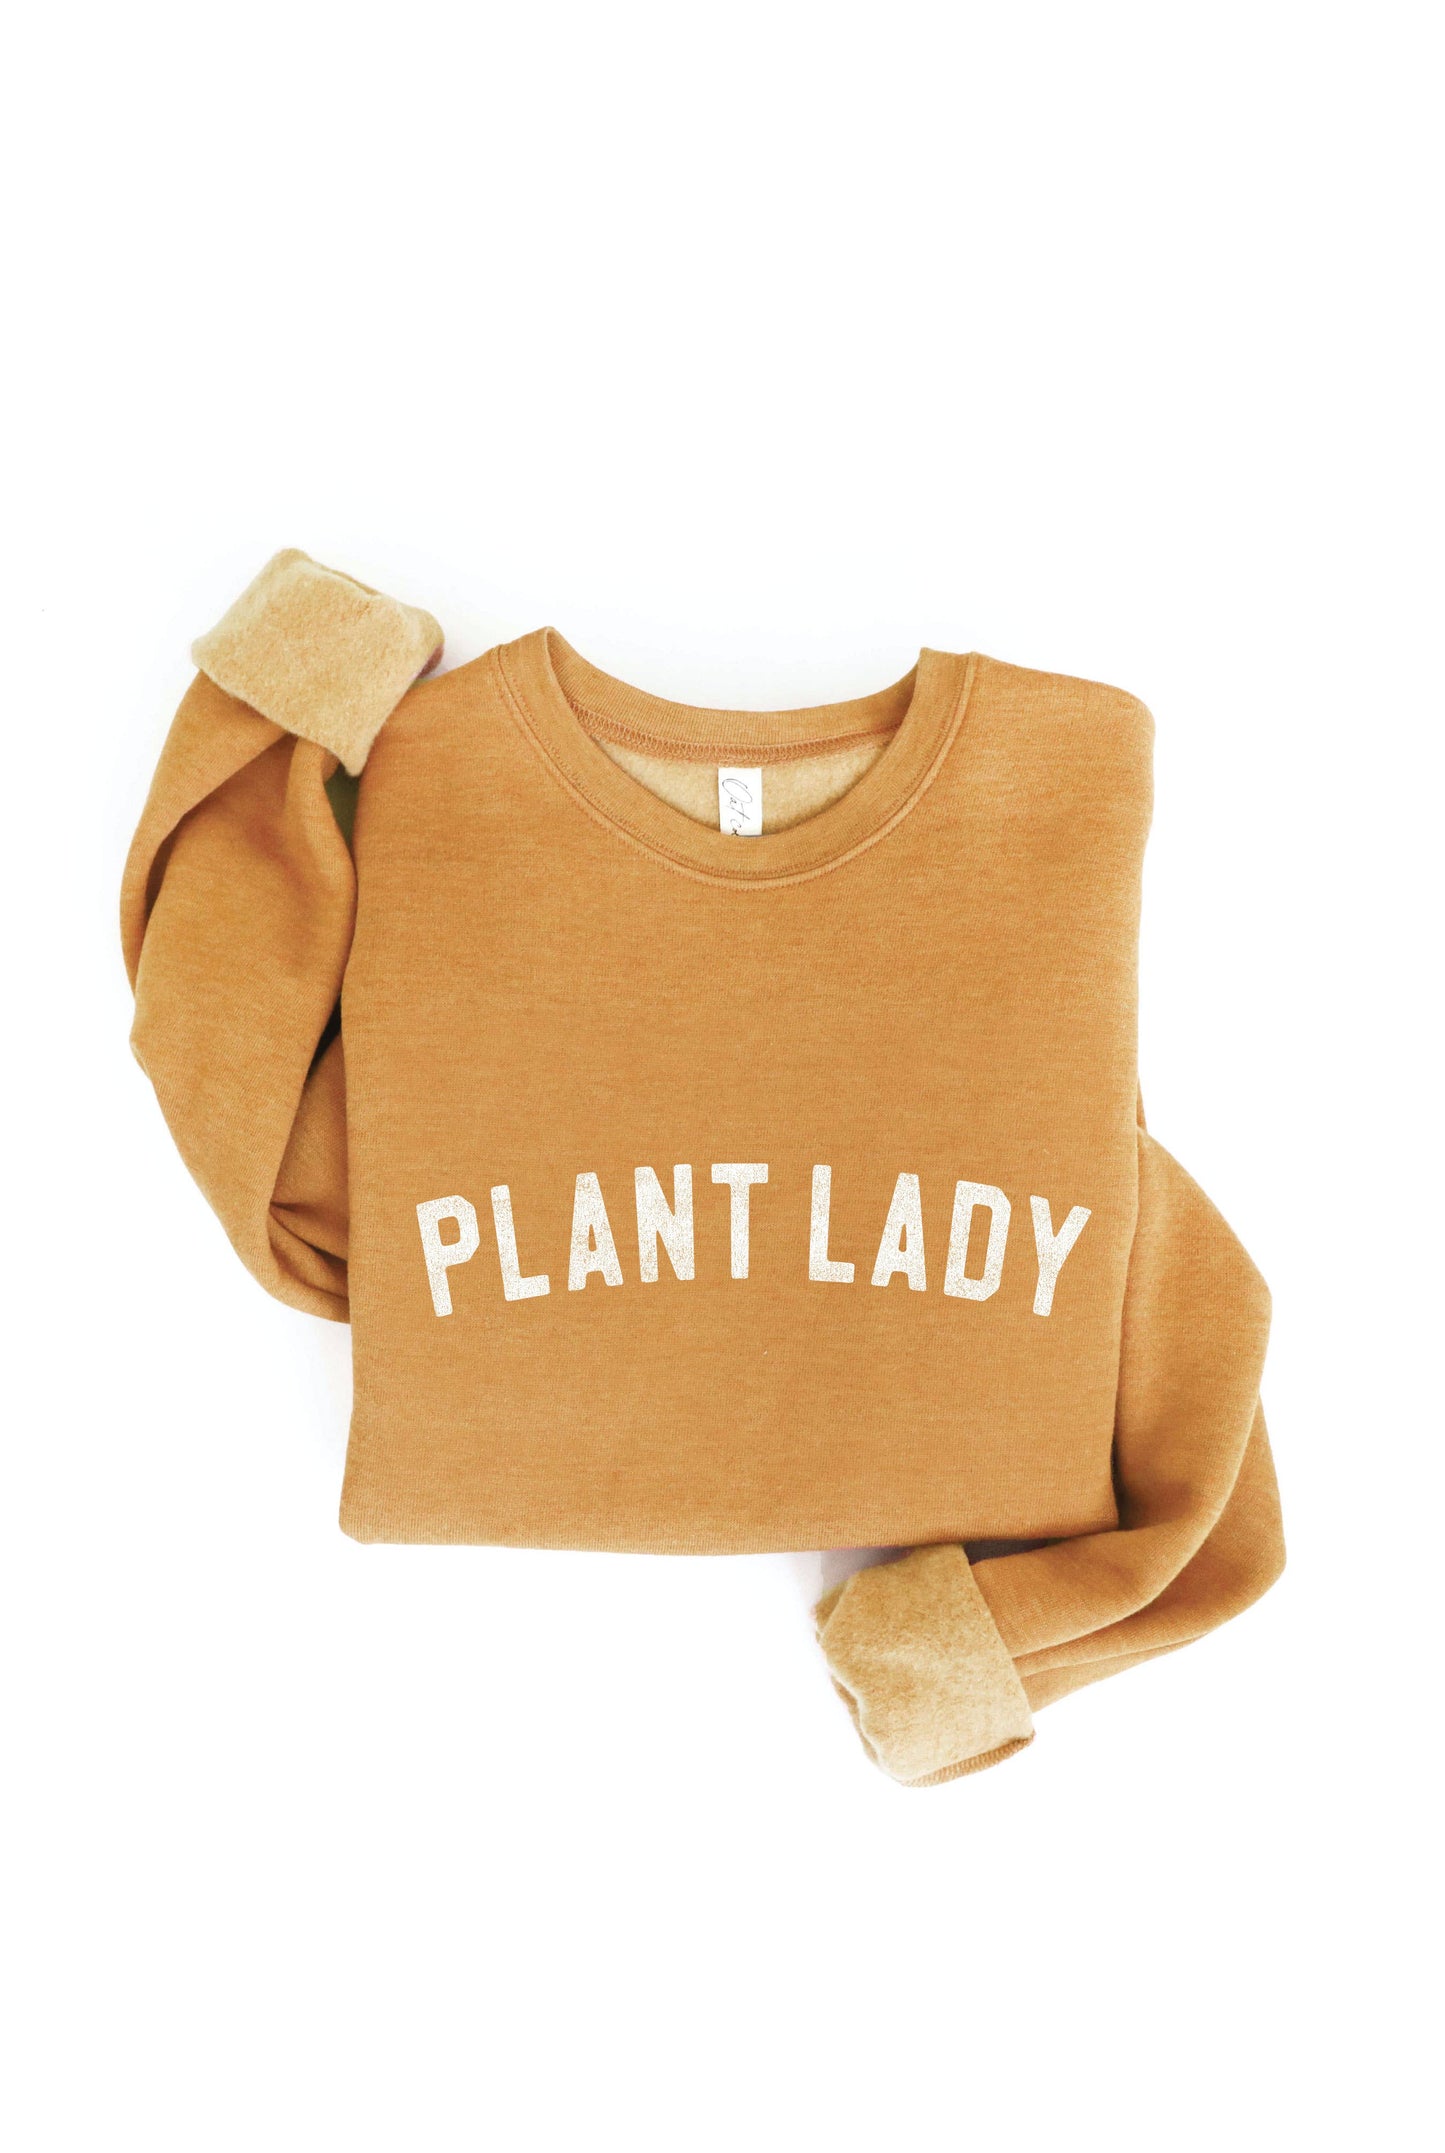 PLANT LADY Print Graphic Sweatshirt: M / HEATHER FOREST